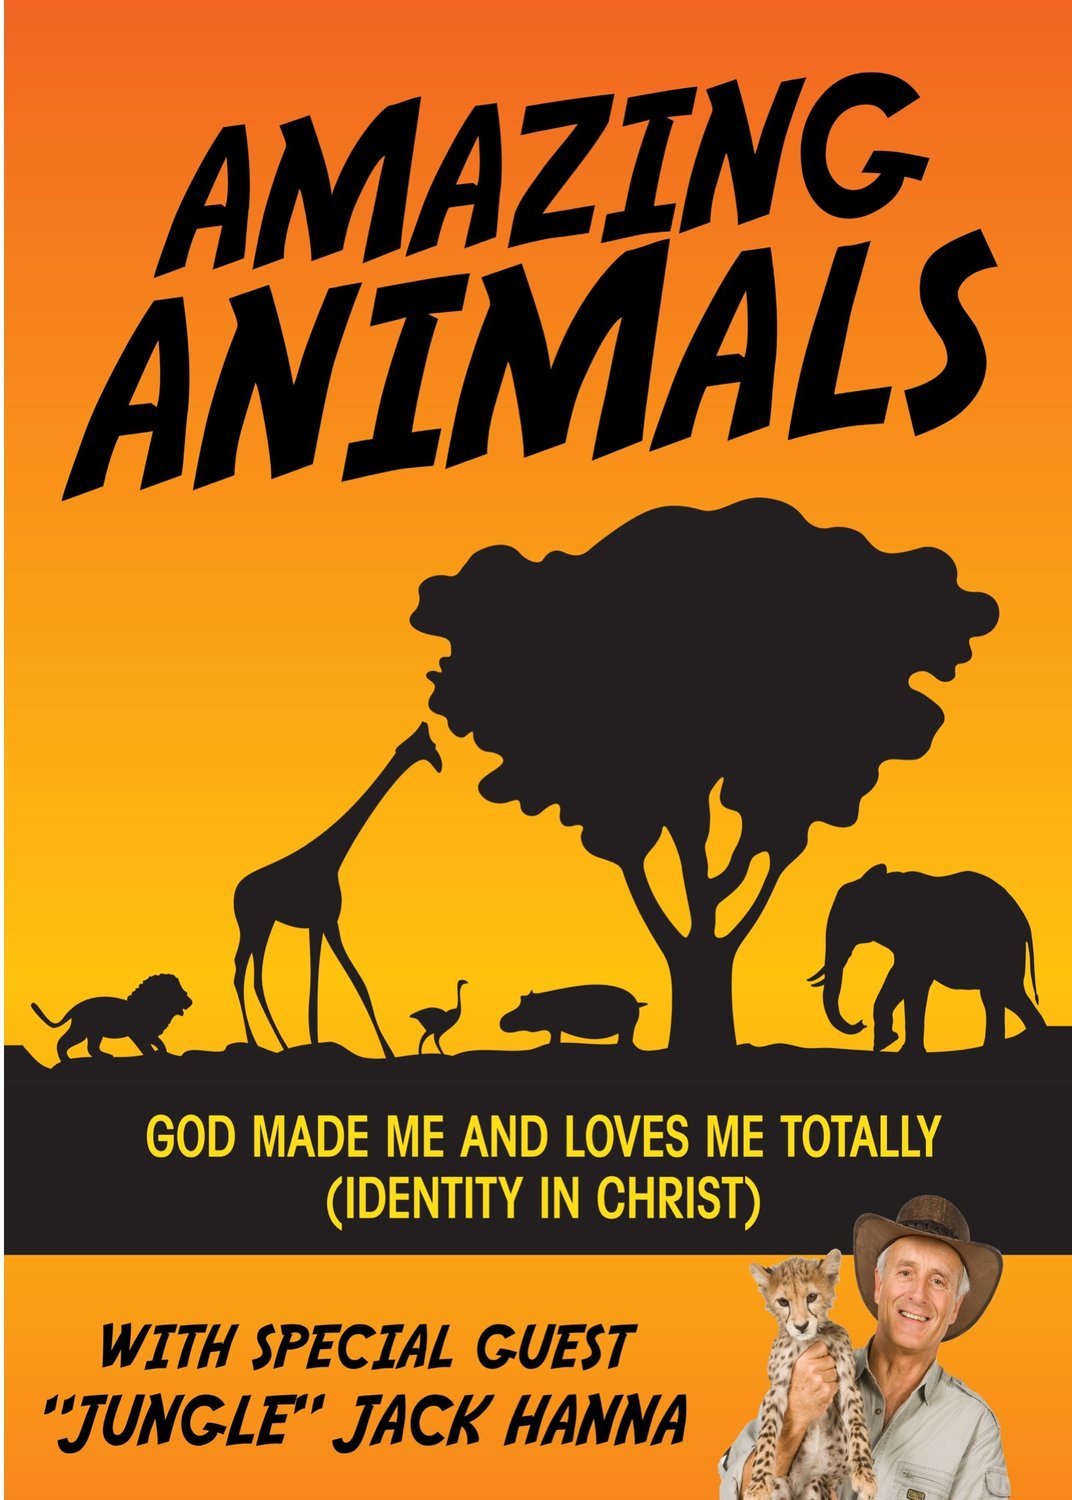 AMAZING ANIMALS (identity in Christ series)